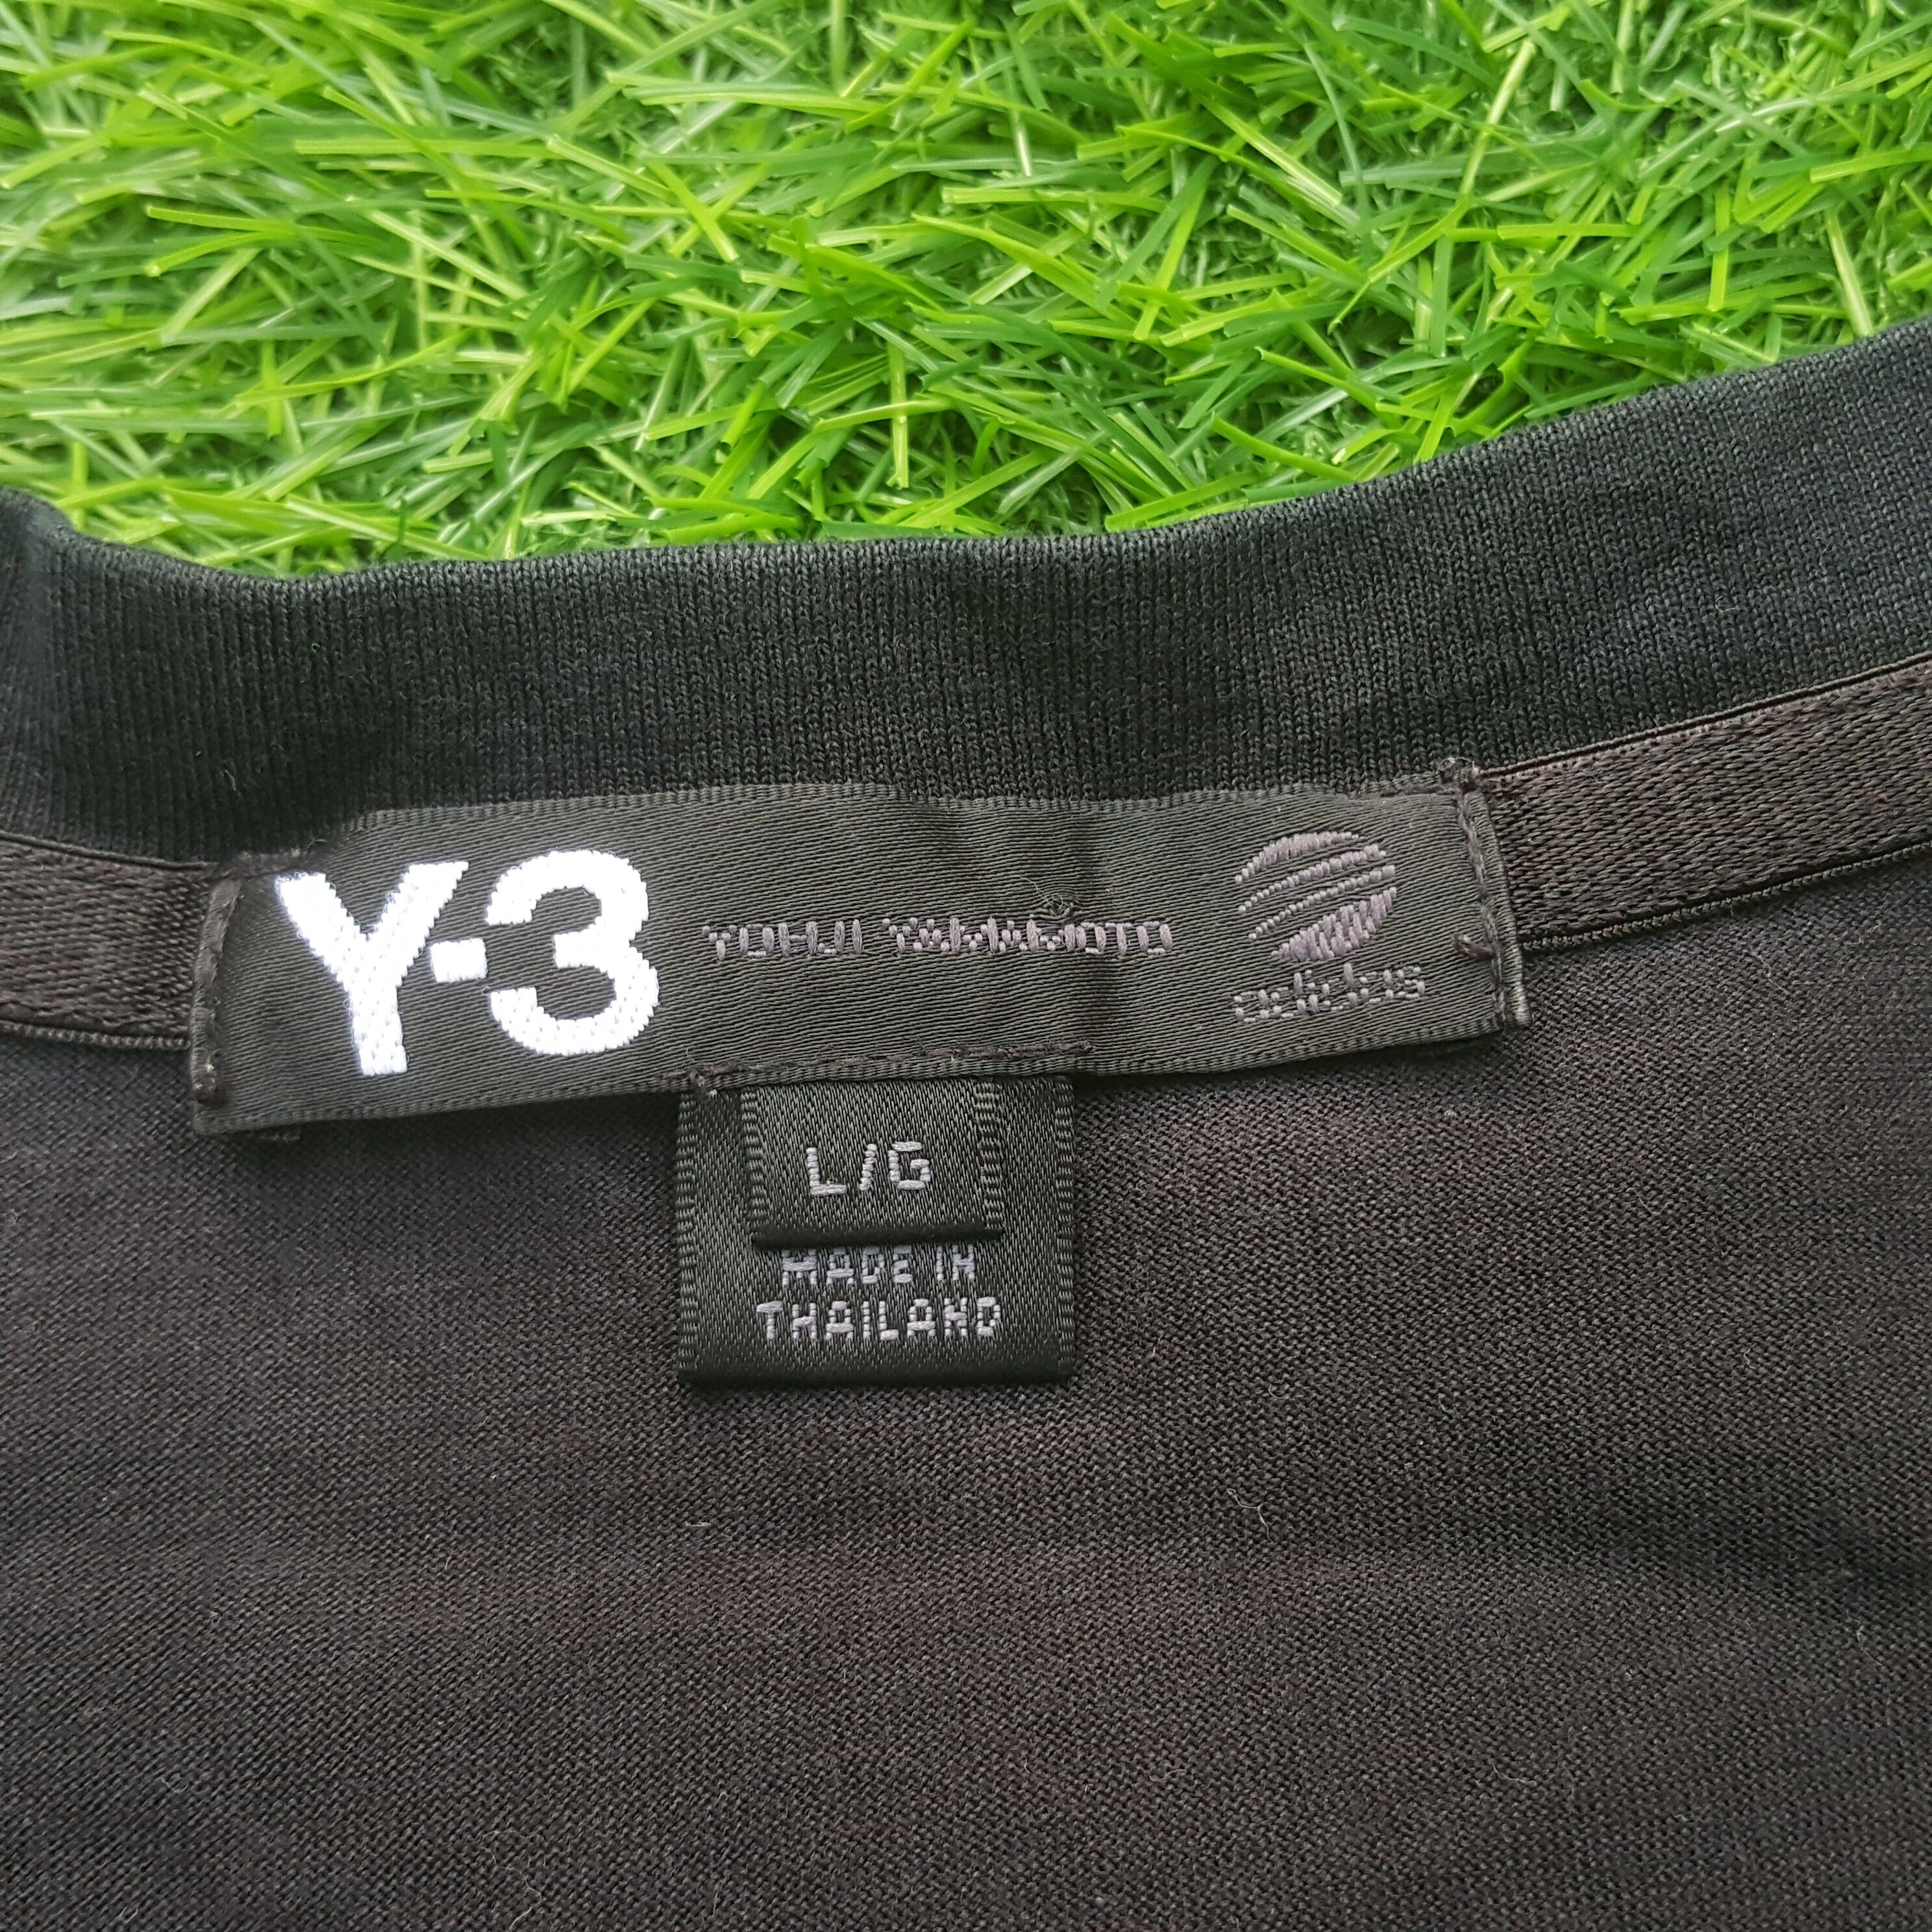 Yohji Yamamoto x Adidas Y3 V-Neck Tshirt - 5